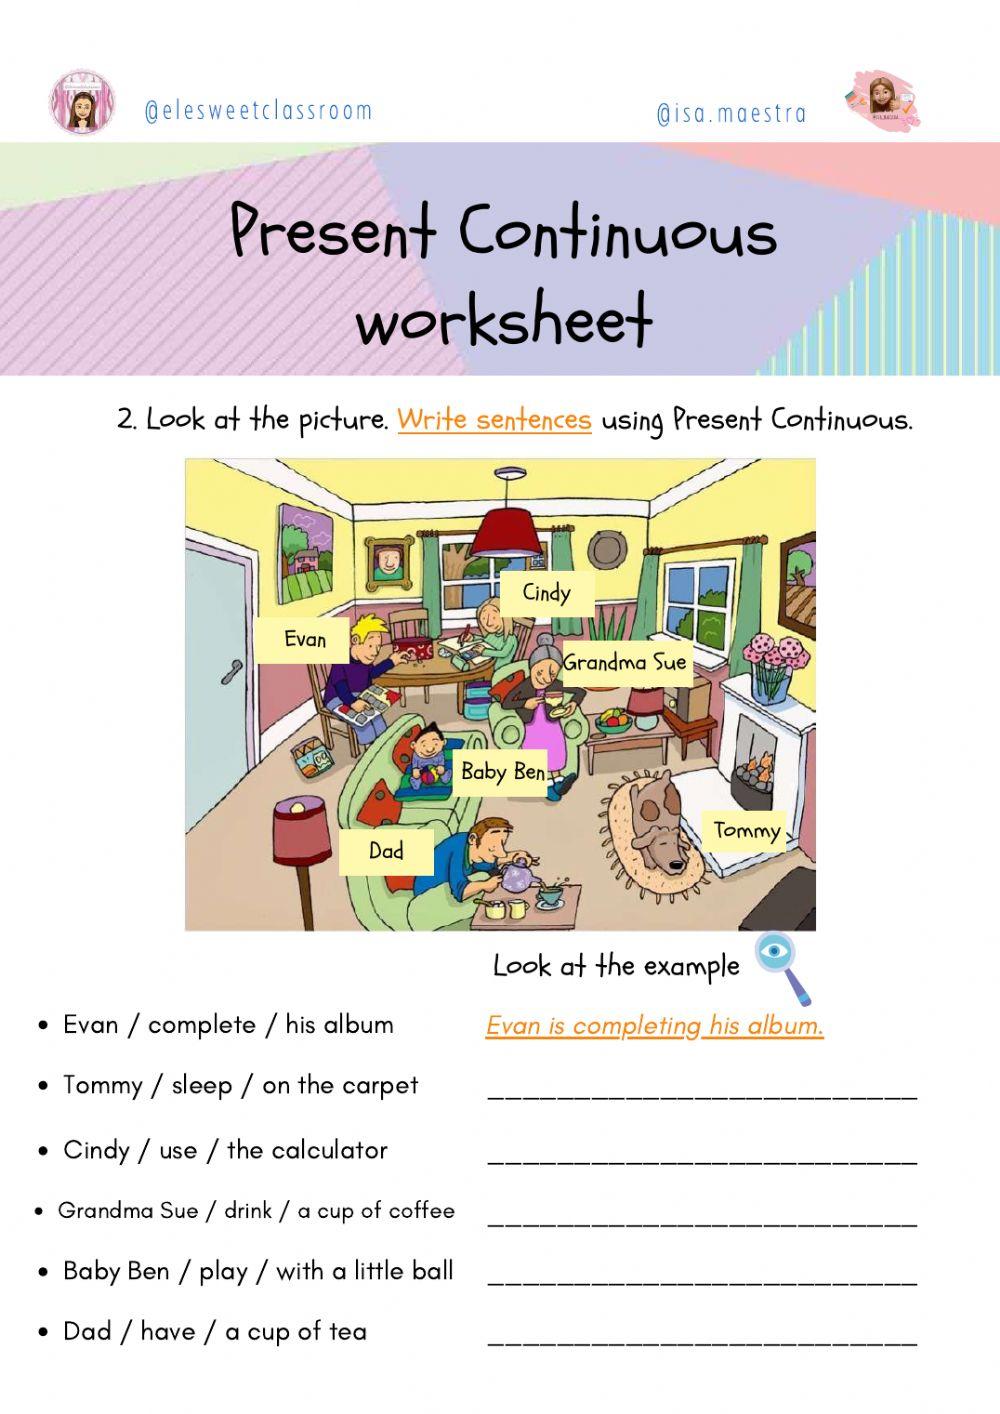 Present Continuous Worksheet -isa.maestra -elesweetclassroom